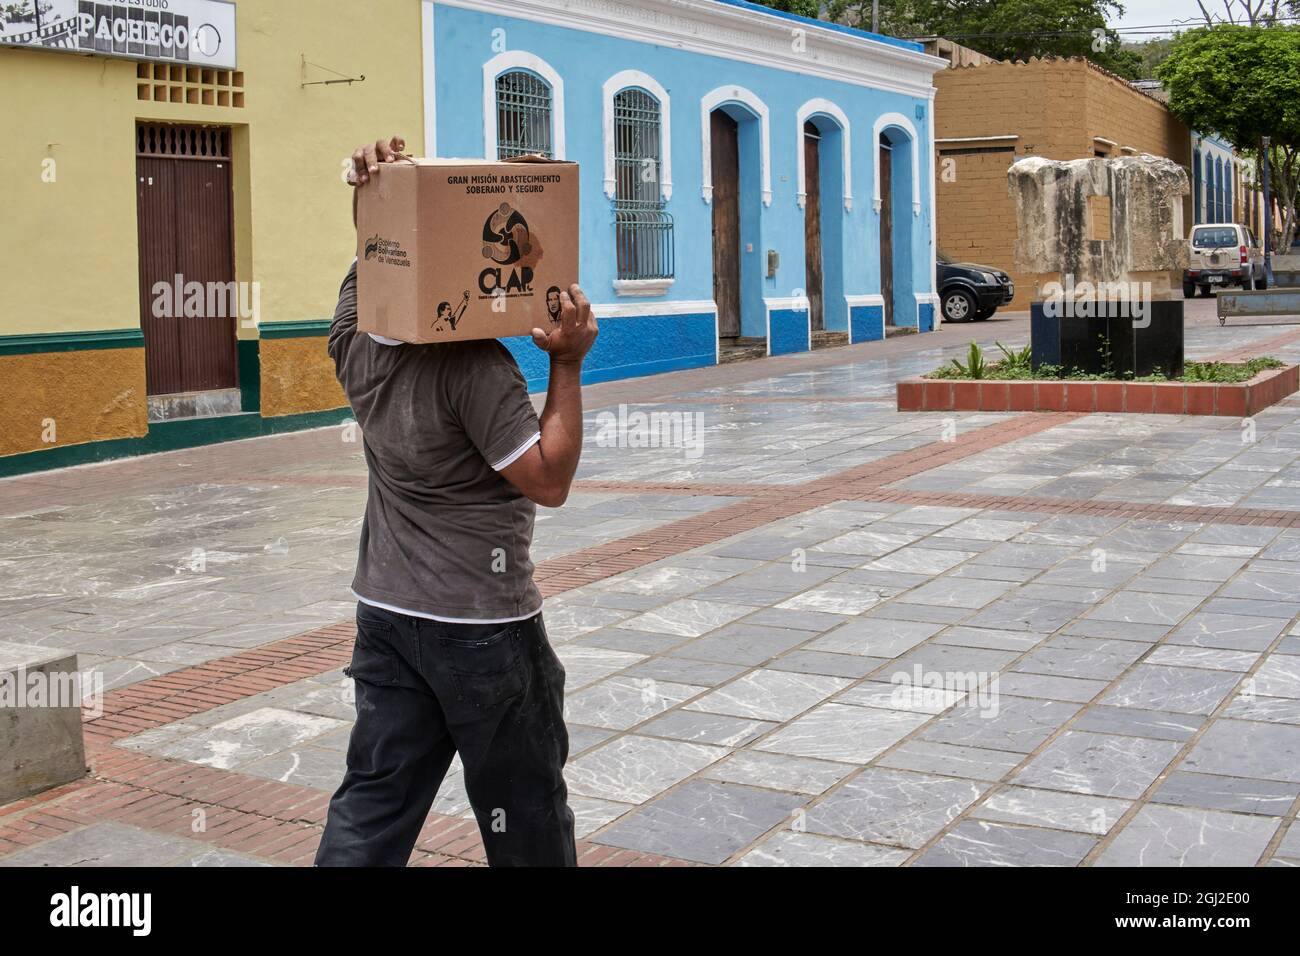 Man Carrying a Venezuelan Clap food package Stock Photo